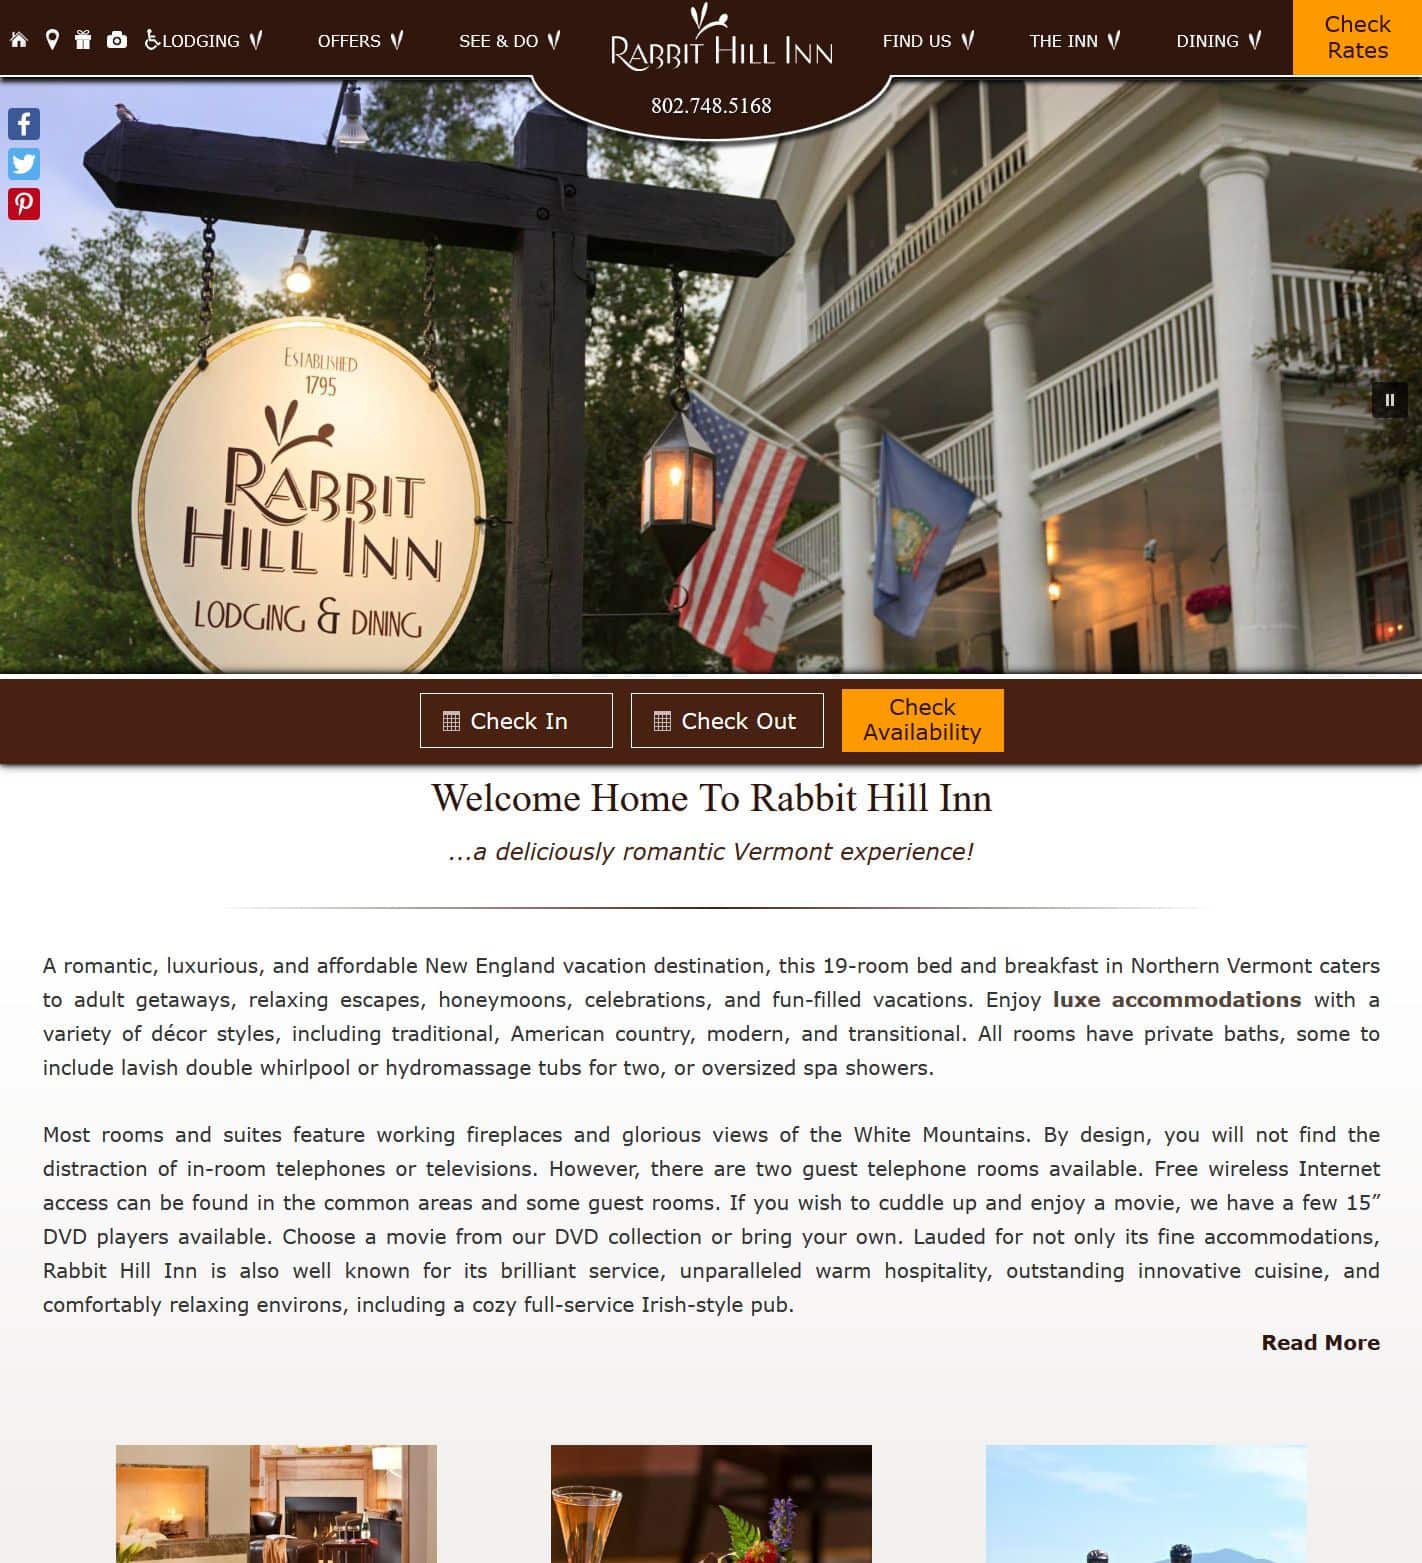 Rabbit Hill Inn website home page screencap